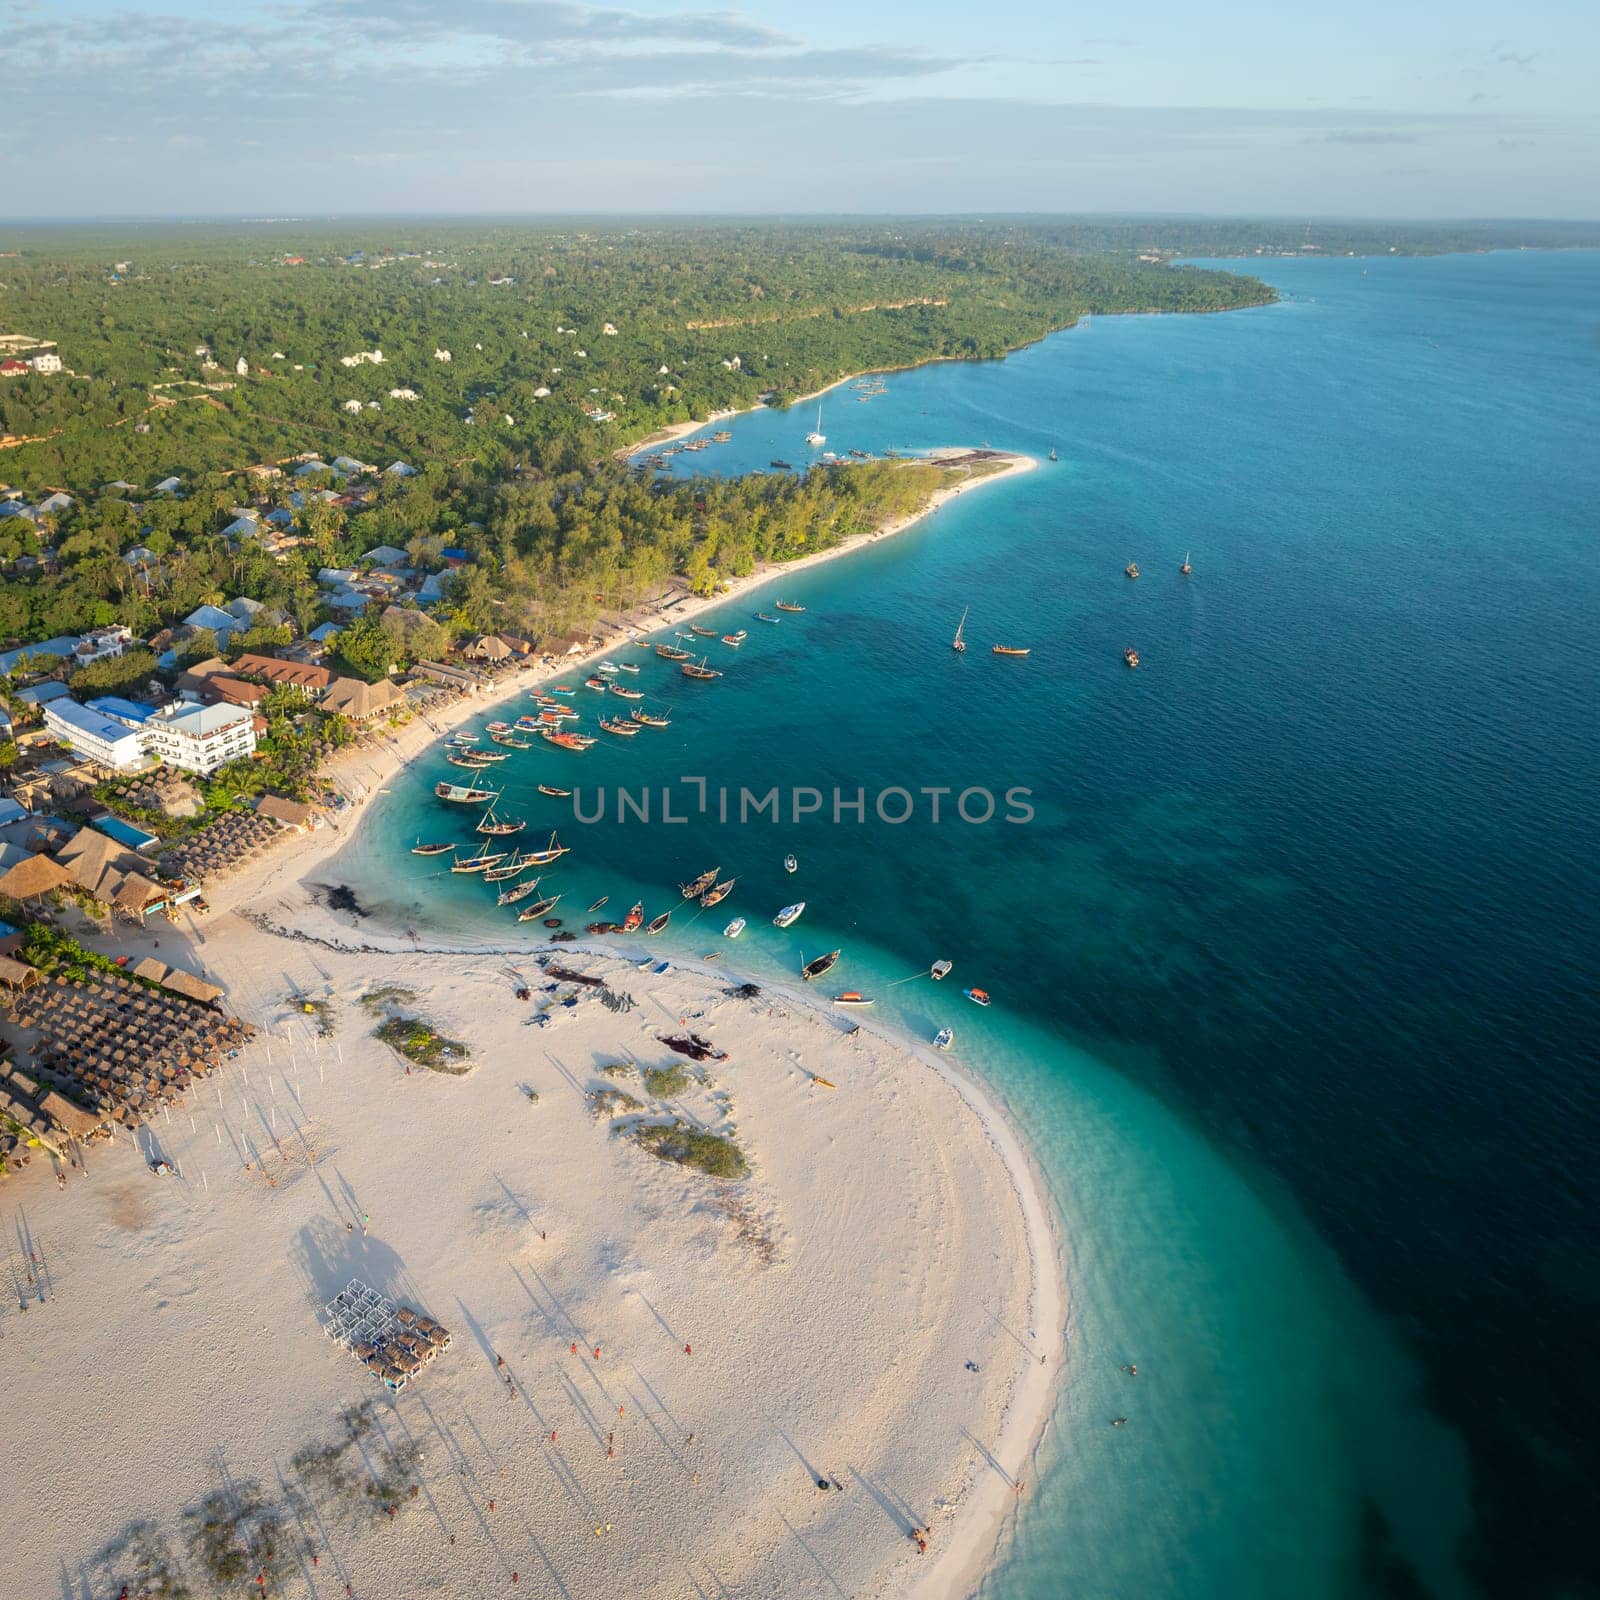 Zanzibar panorama of the fishing boats on tropical sea coast with sandy beach by Robertobinetti70